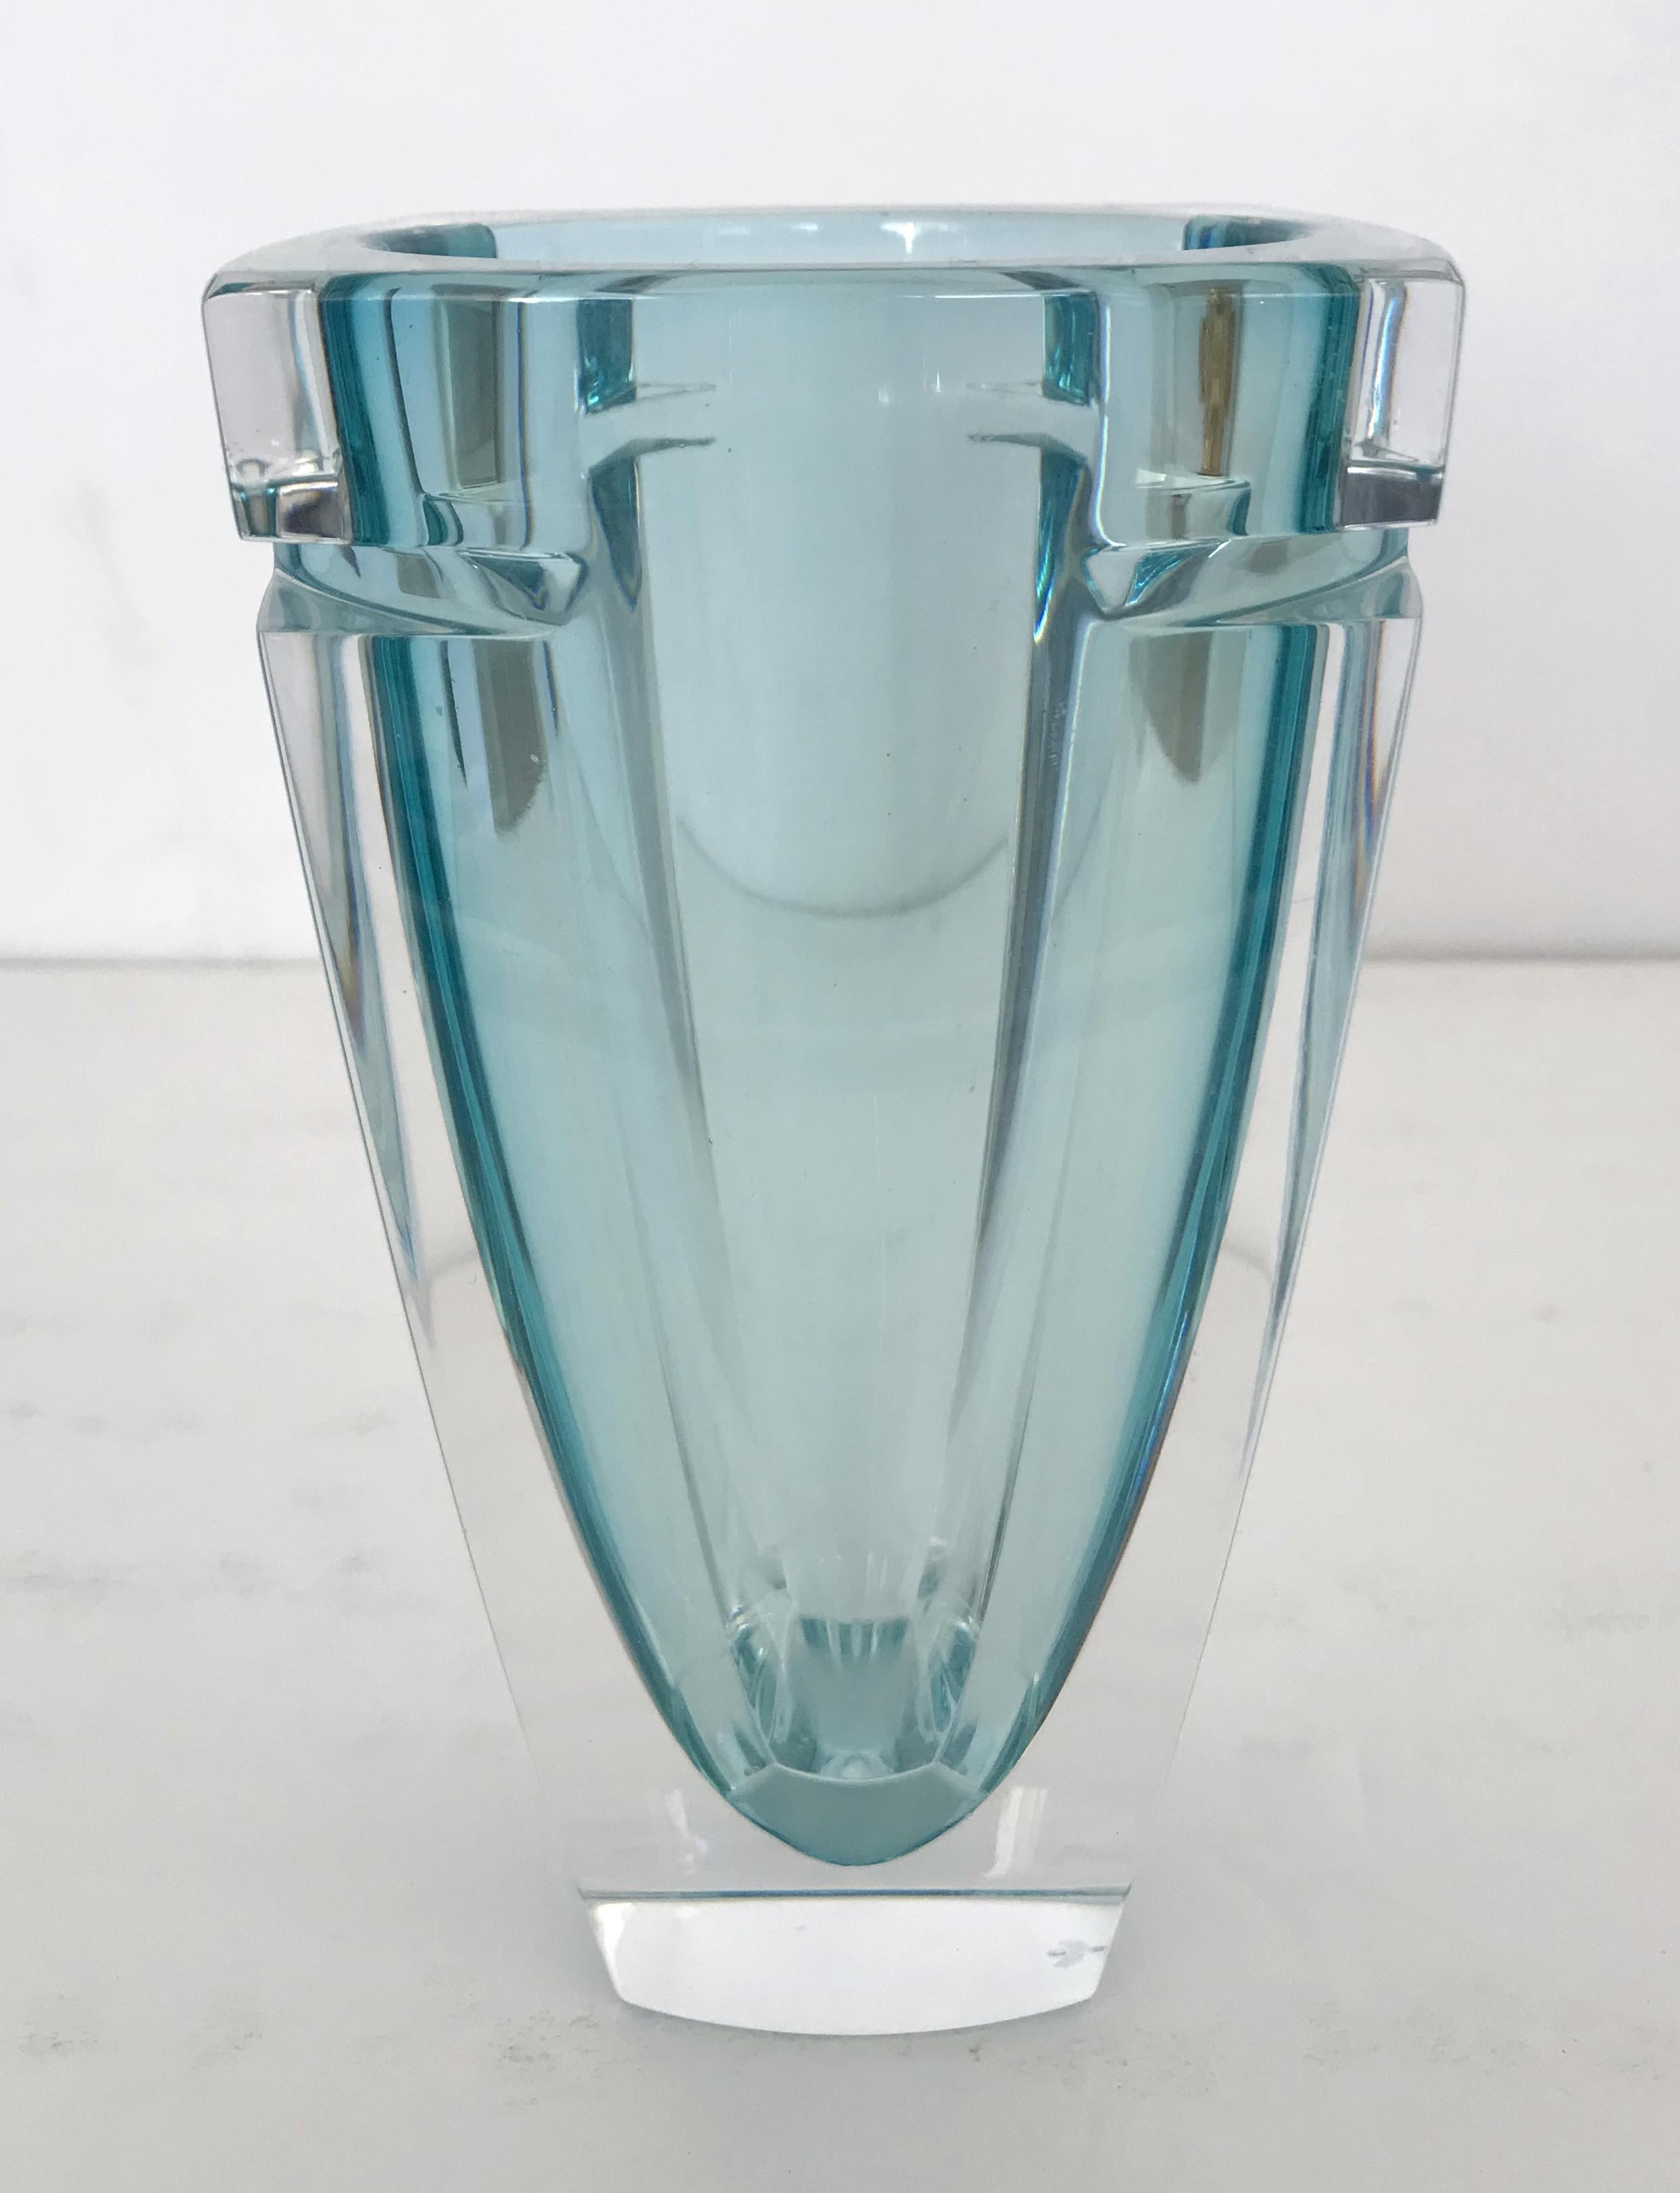 Beautiful elliptical crystal vase sculpture in light blue color / Made in Ireland circa 2000s
Original 